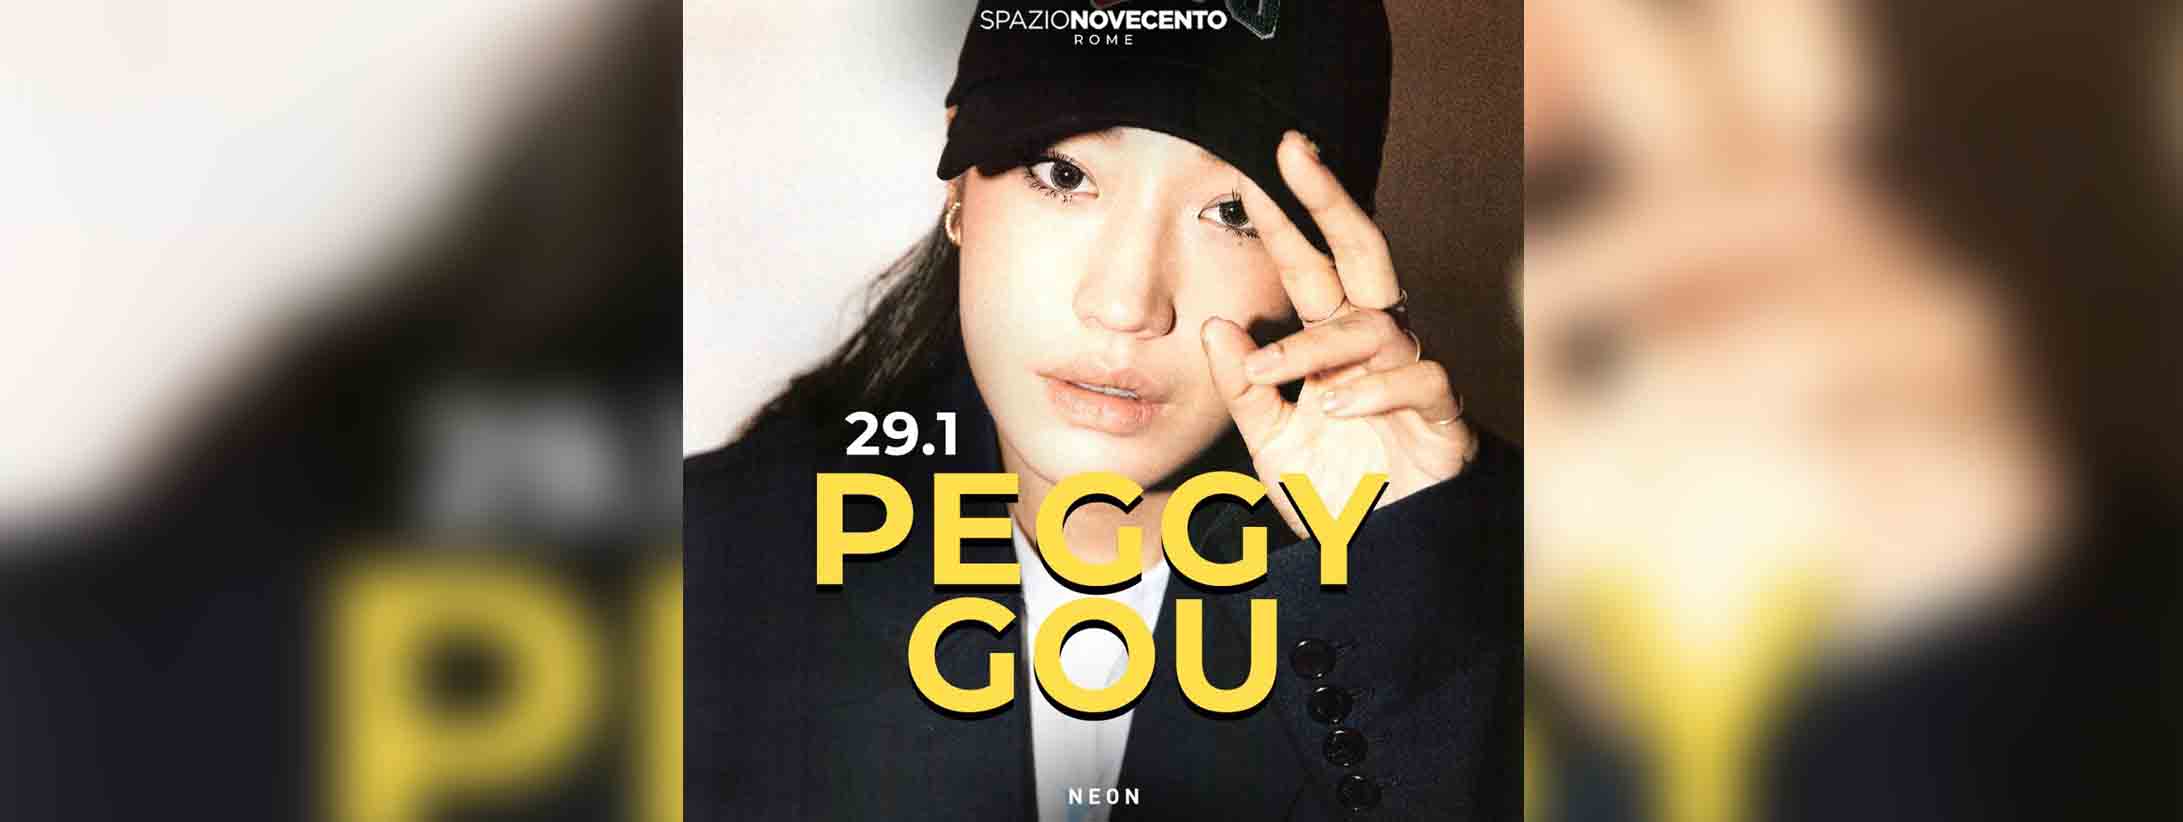 Peggy-gou-spazio-novecento-29-01-2021